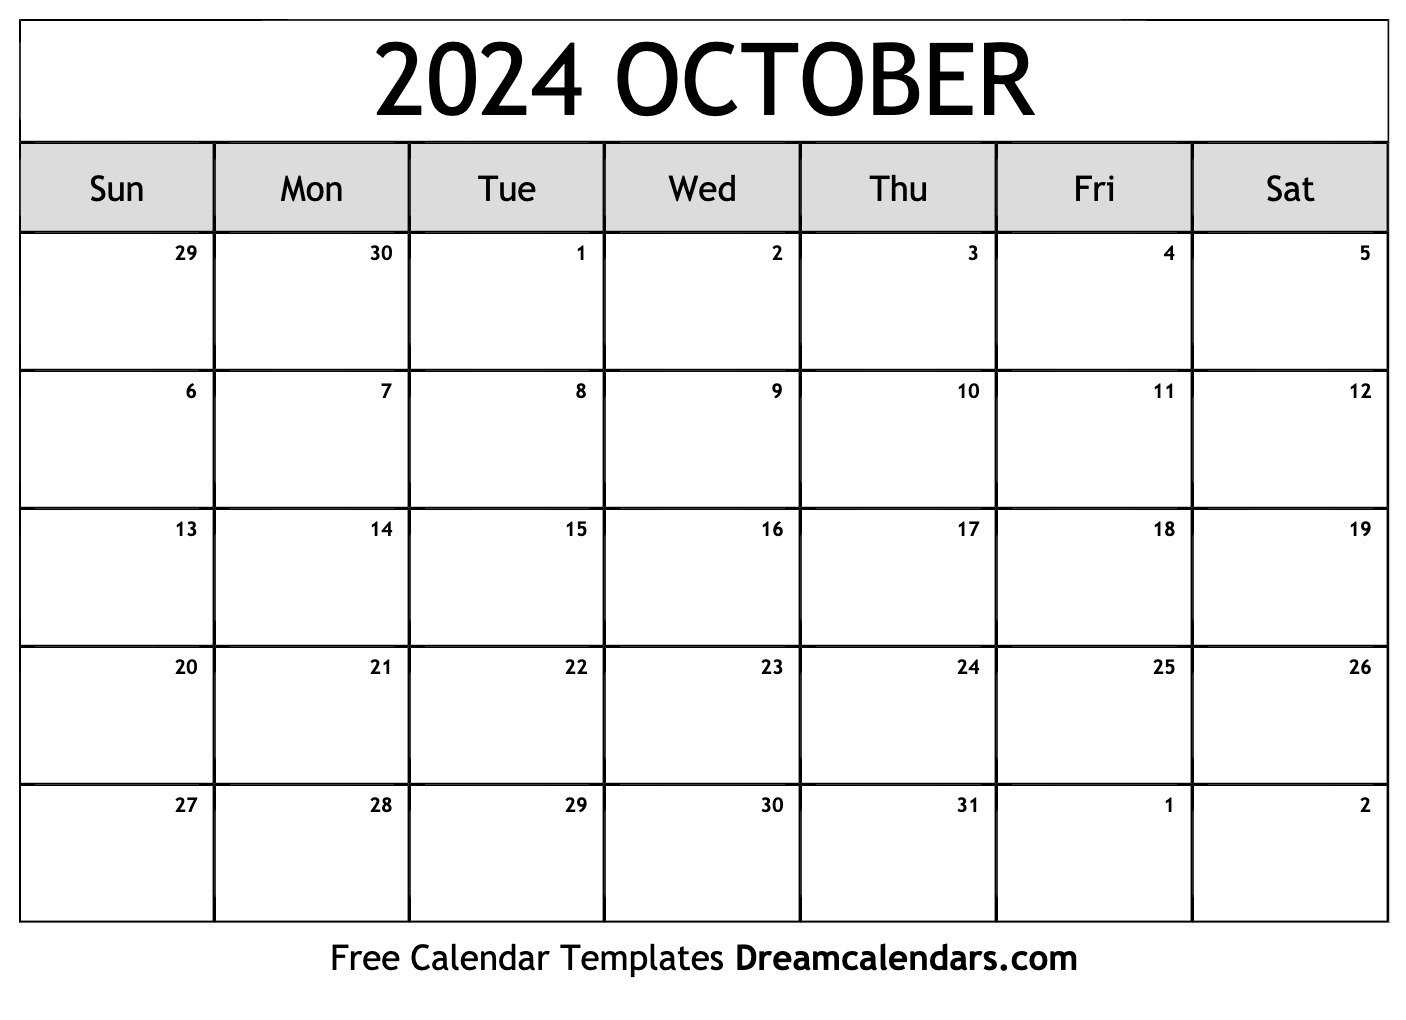 Free Print Calendar October 2024 Holiday 2024 Calendar - Free Printable 2024 Monthly Calendar With Holidays October